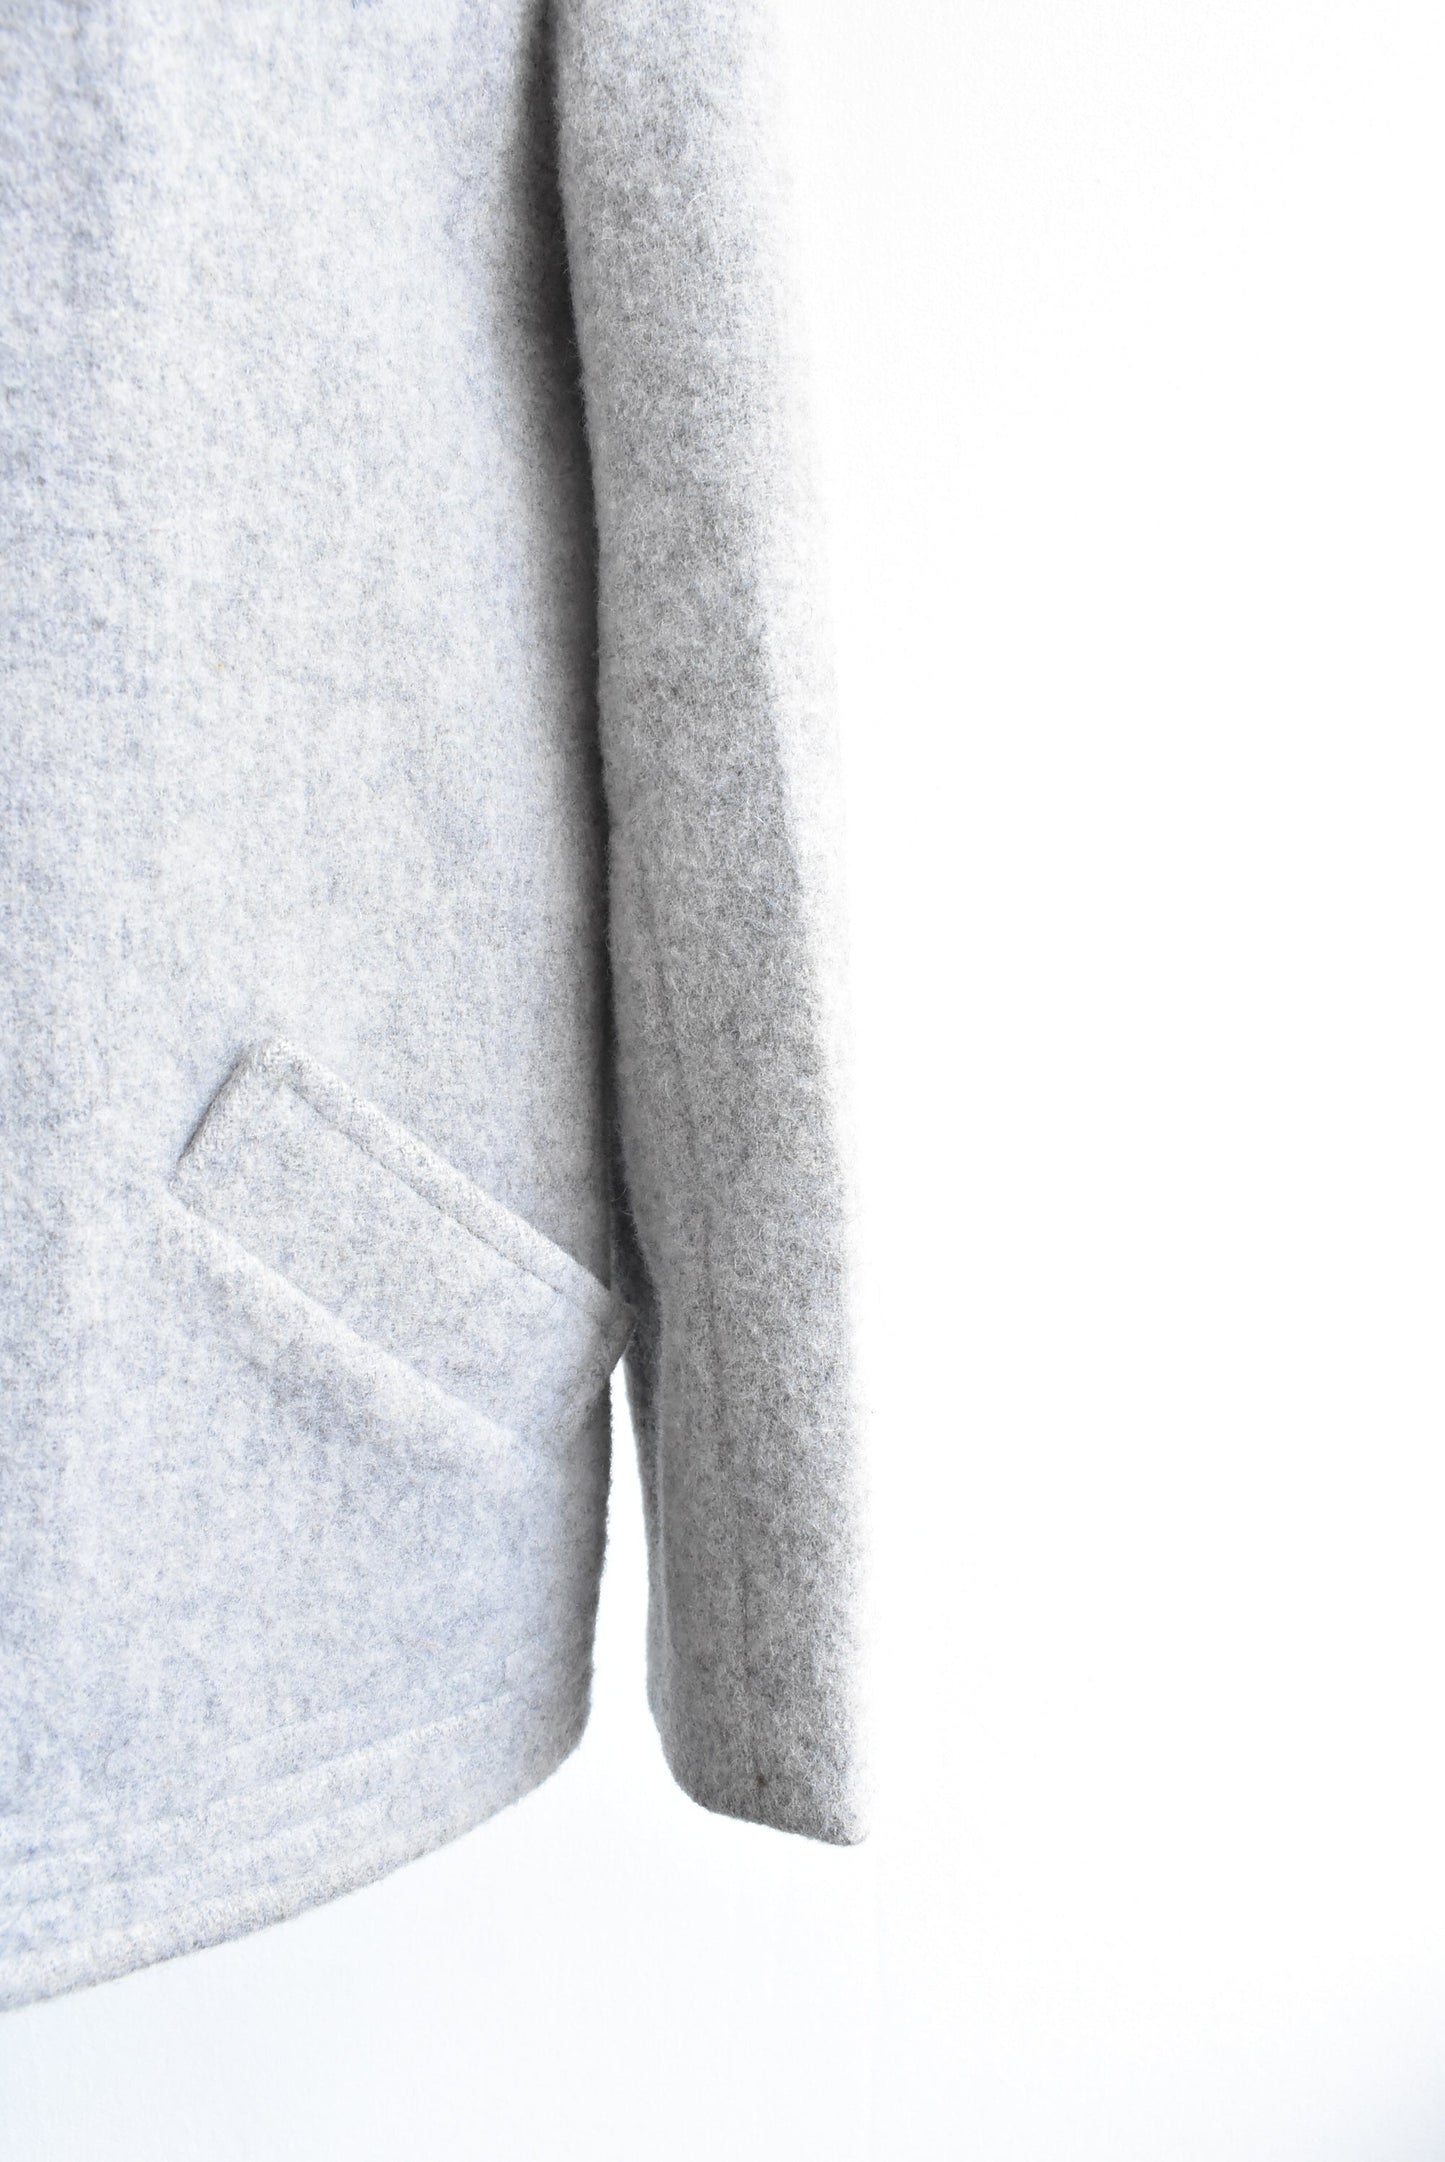 Fashionelle retro wool grey jacket, size 16